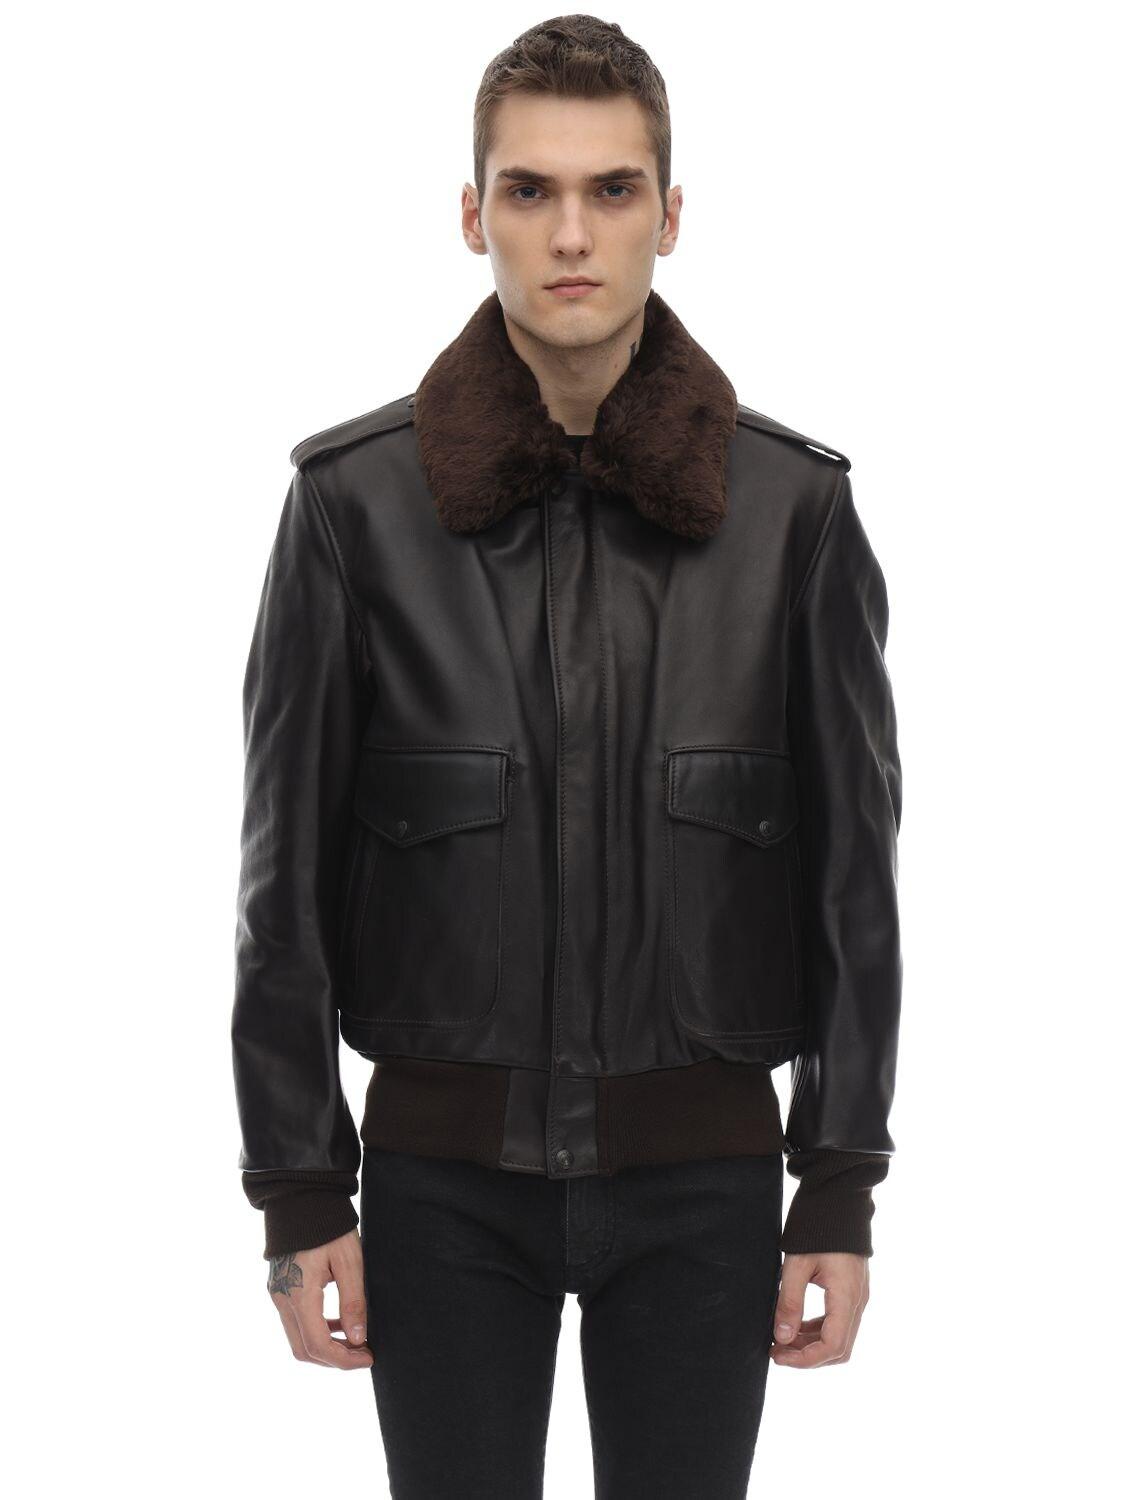 Schott Nyc 184 Leather Jacket in Brown for Men - Lyst